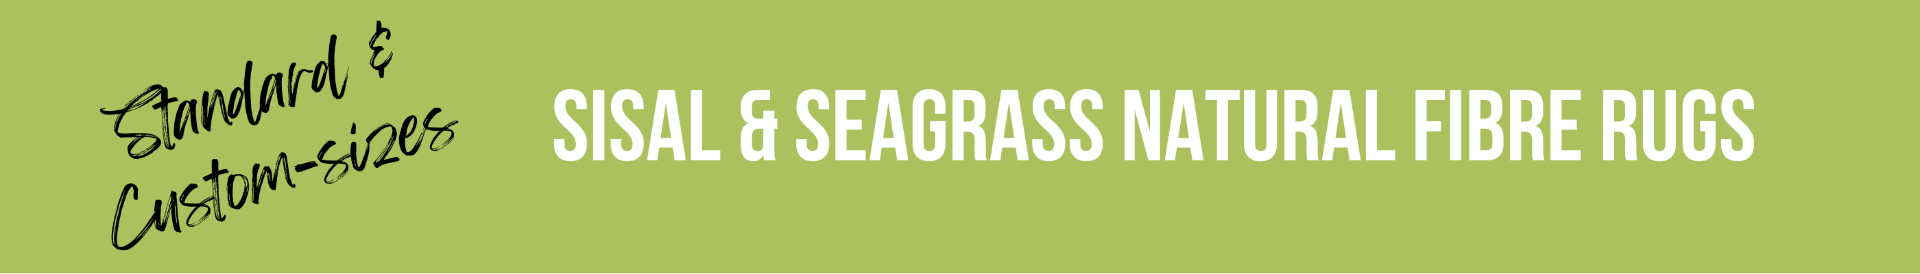 Sisal & Seagrass